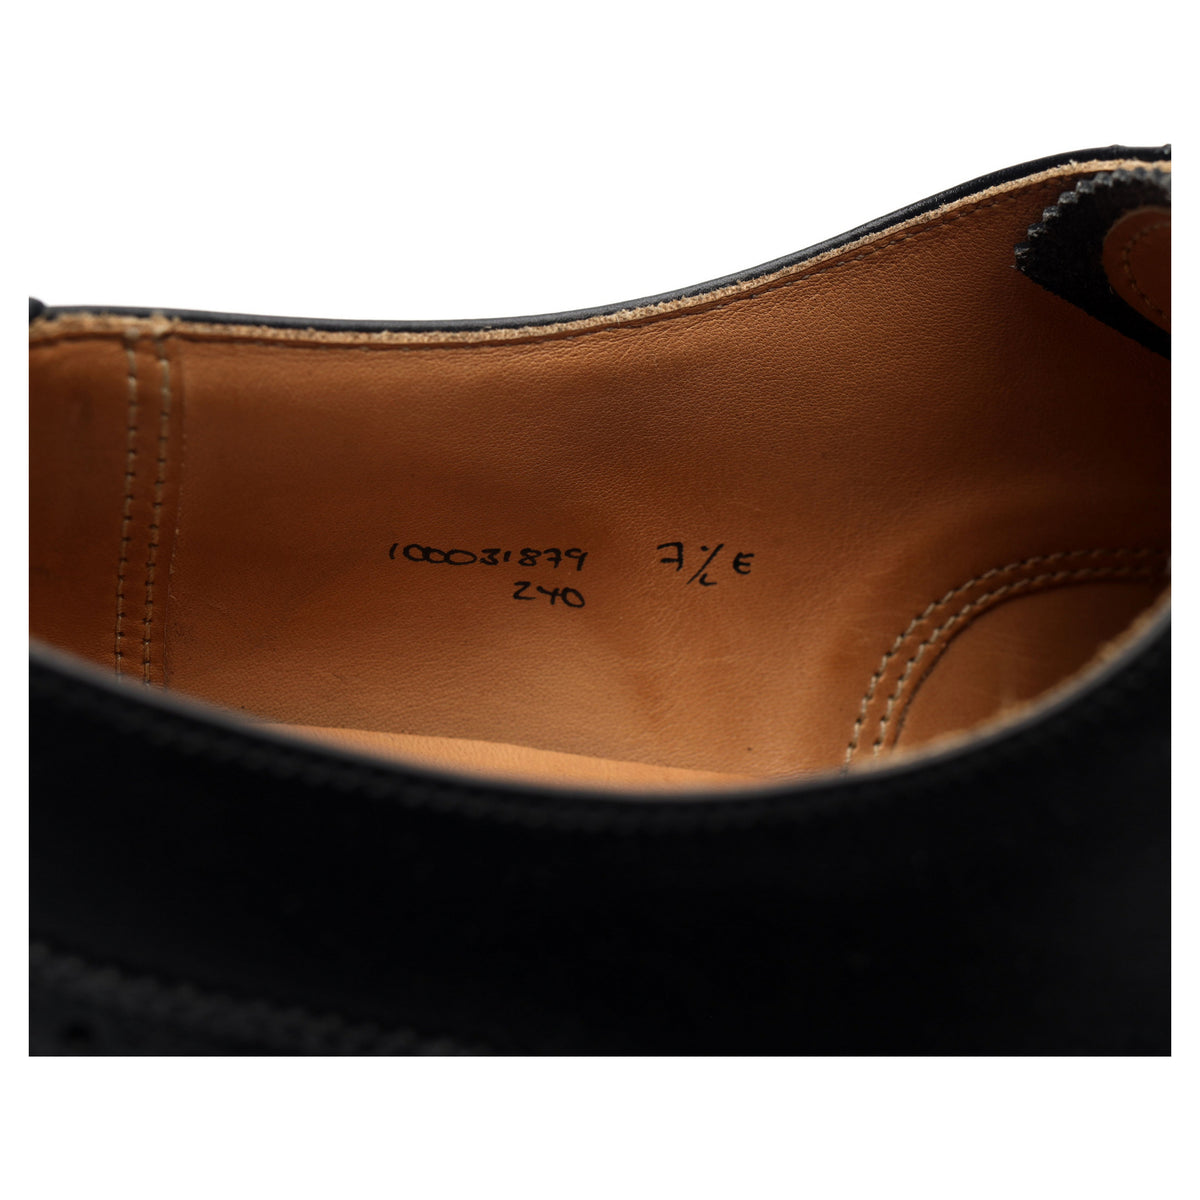 Peal &amp; Co Black Leather Brogues UK 6.5 G US 7.5 E